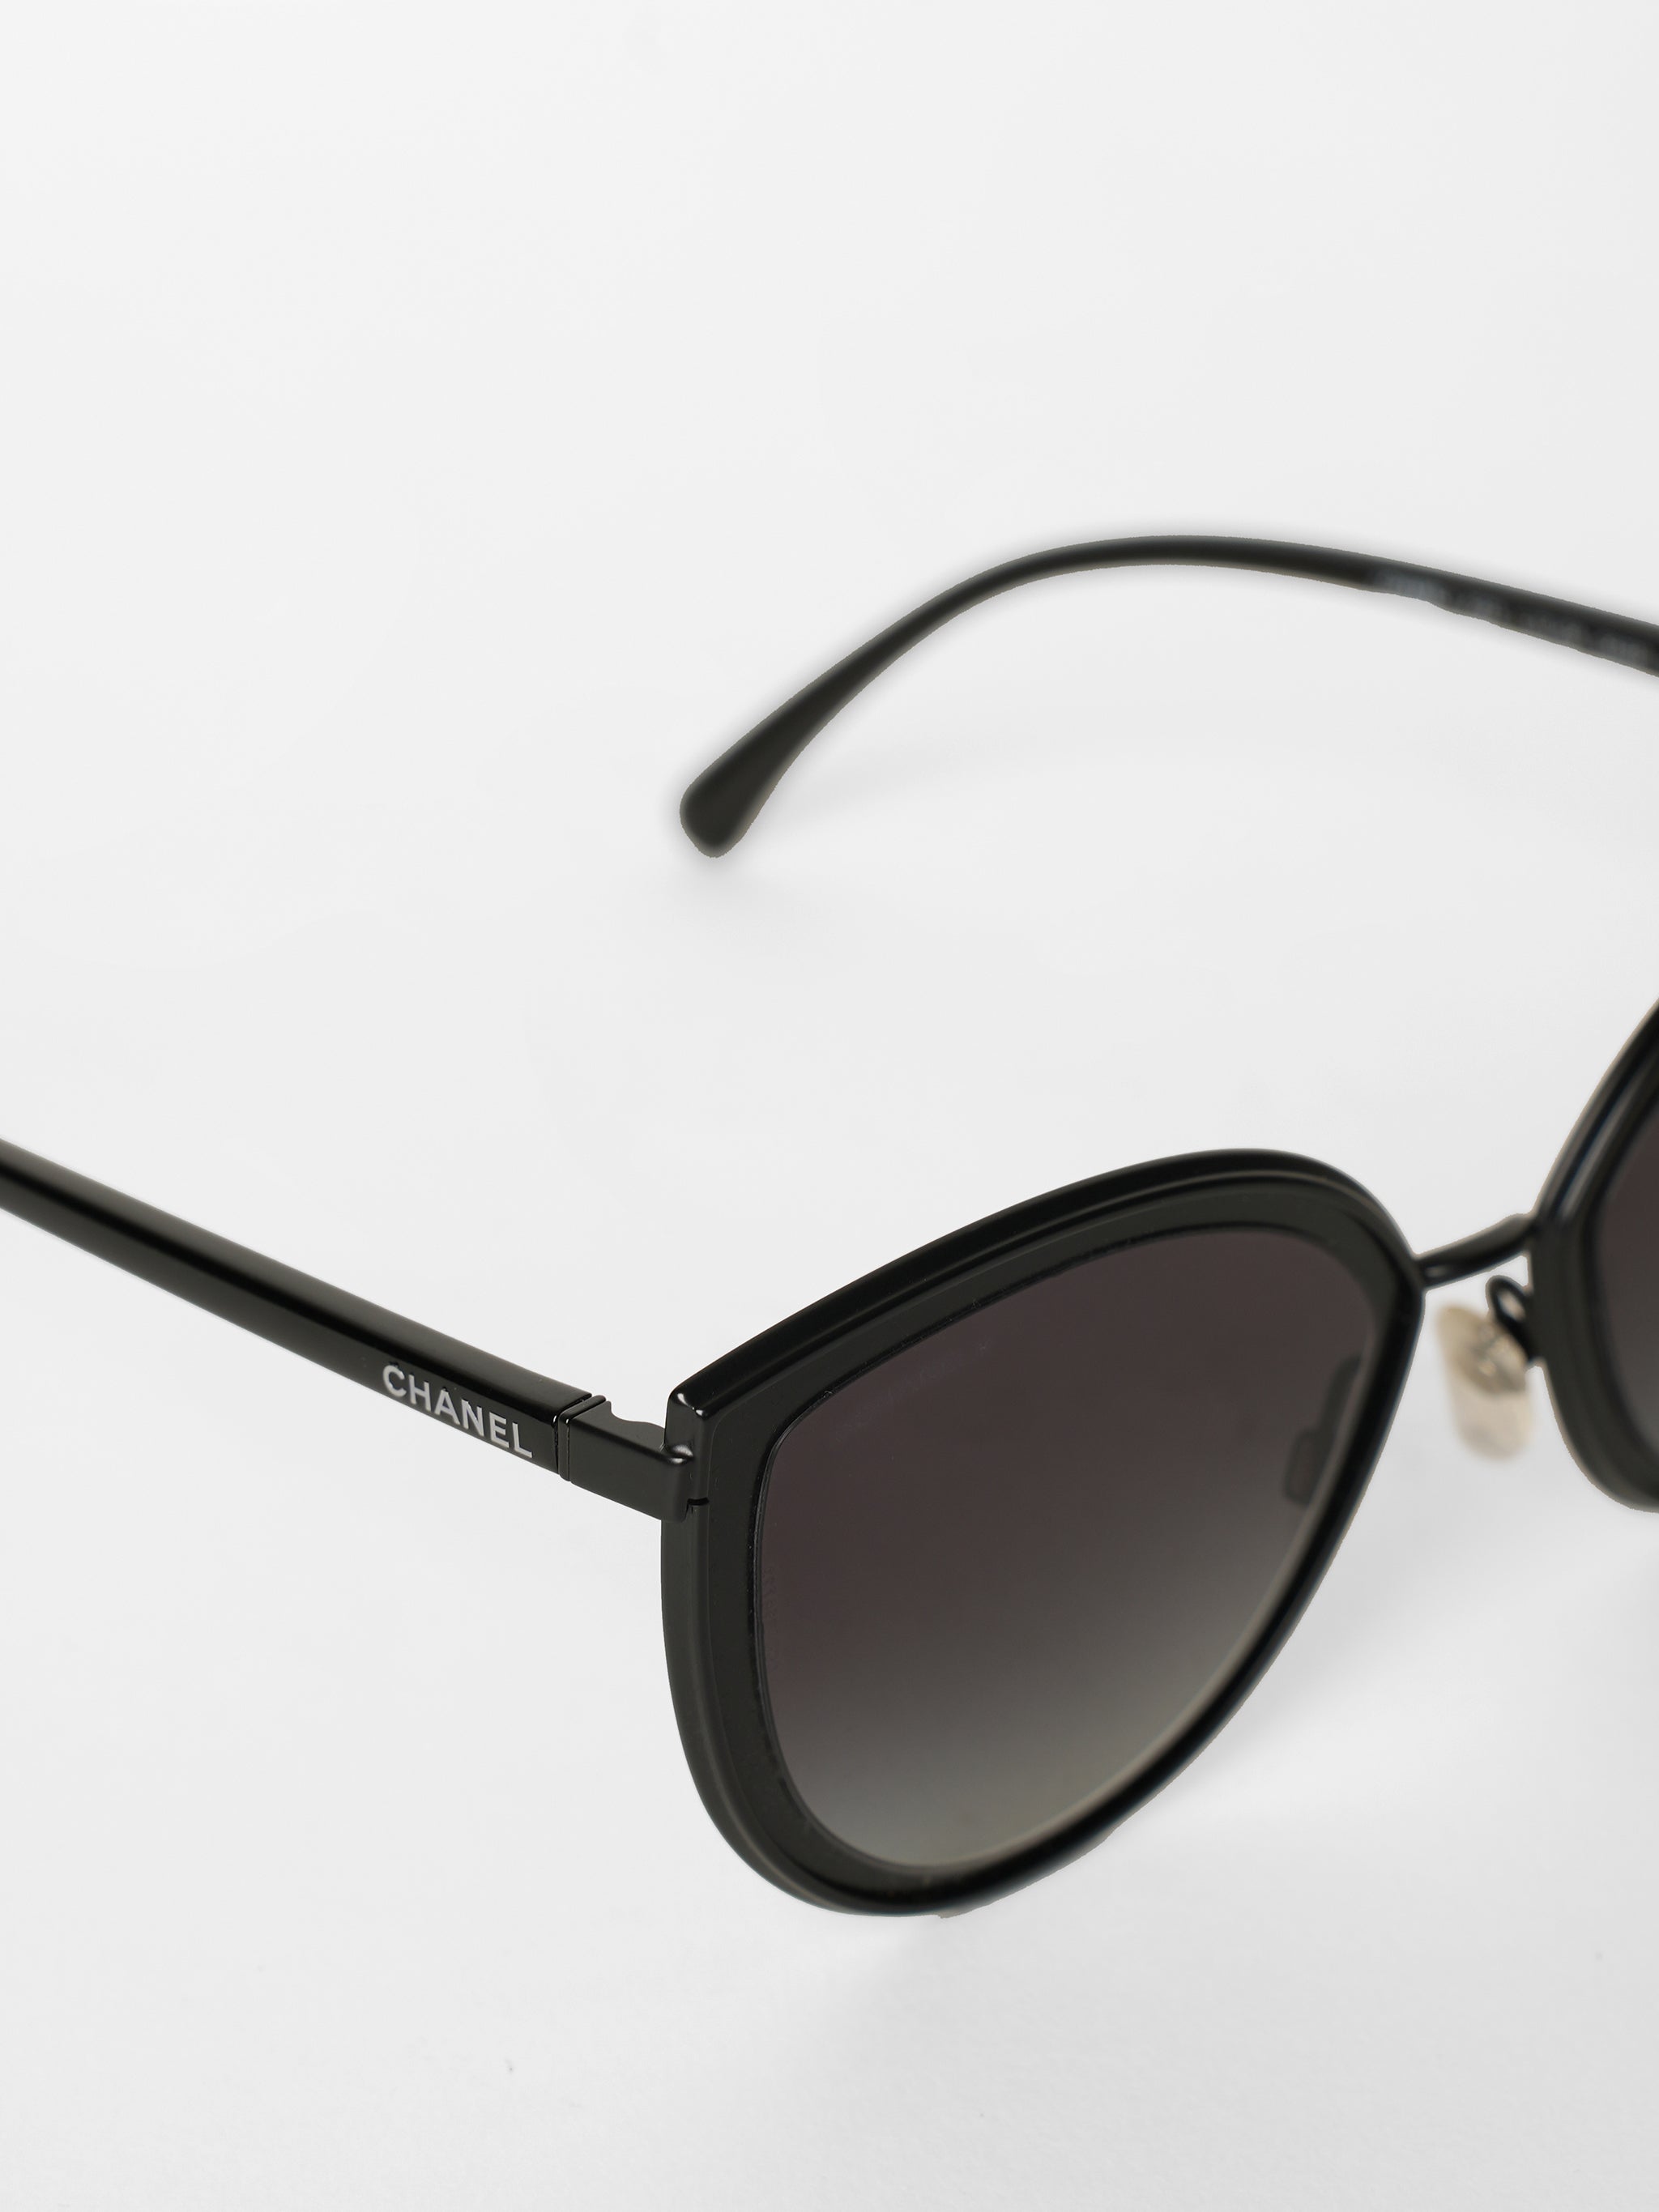 Chanel Cateye Black Sunglasses